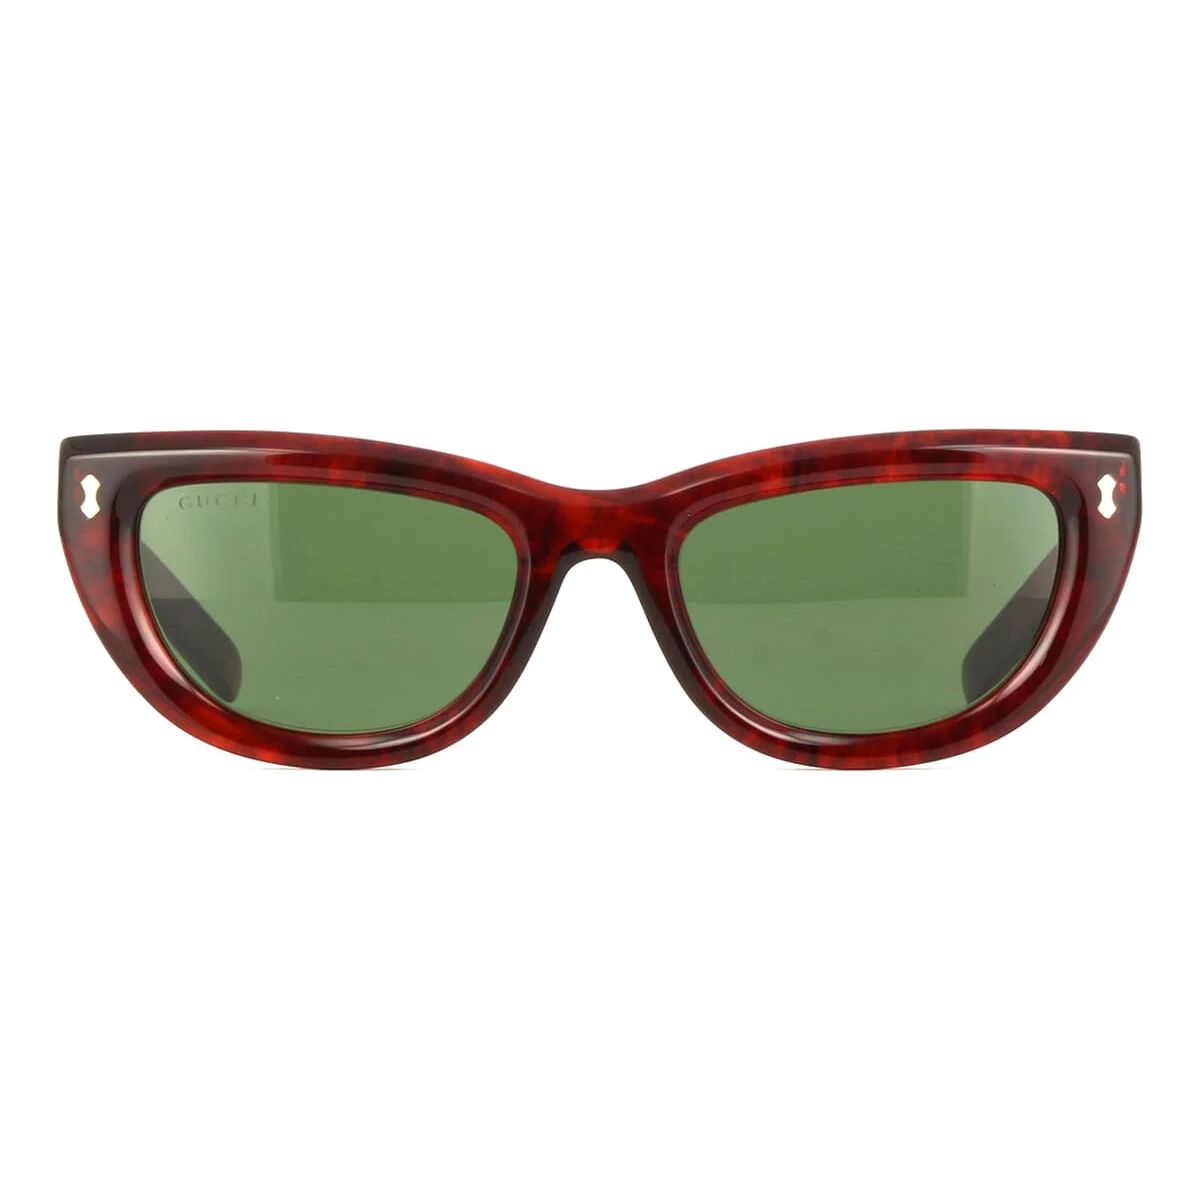 "Gucci Cat Eye Sunglasses For Womens | Optorium"